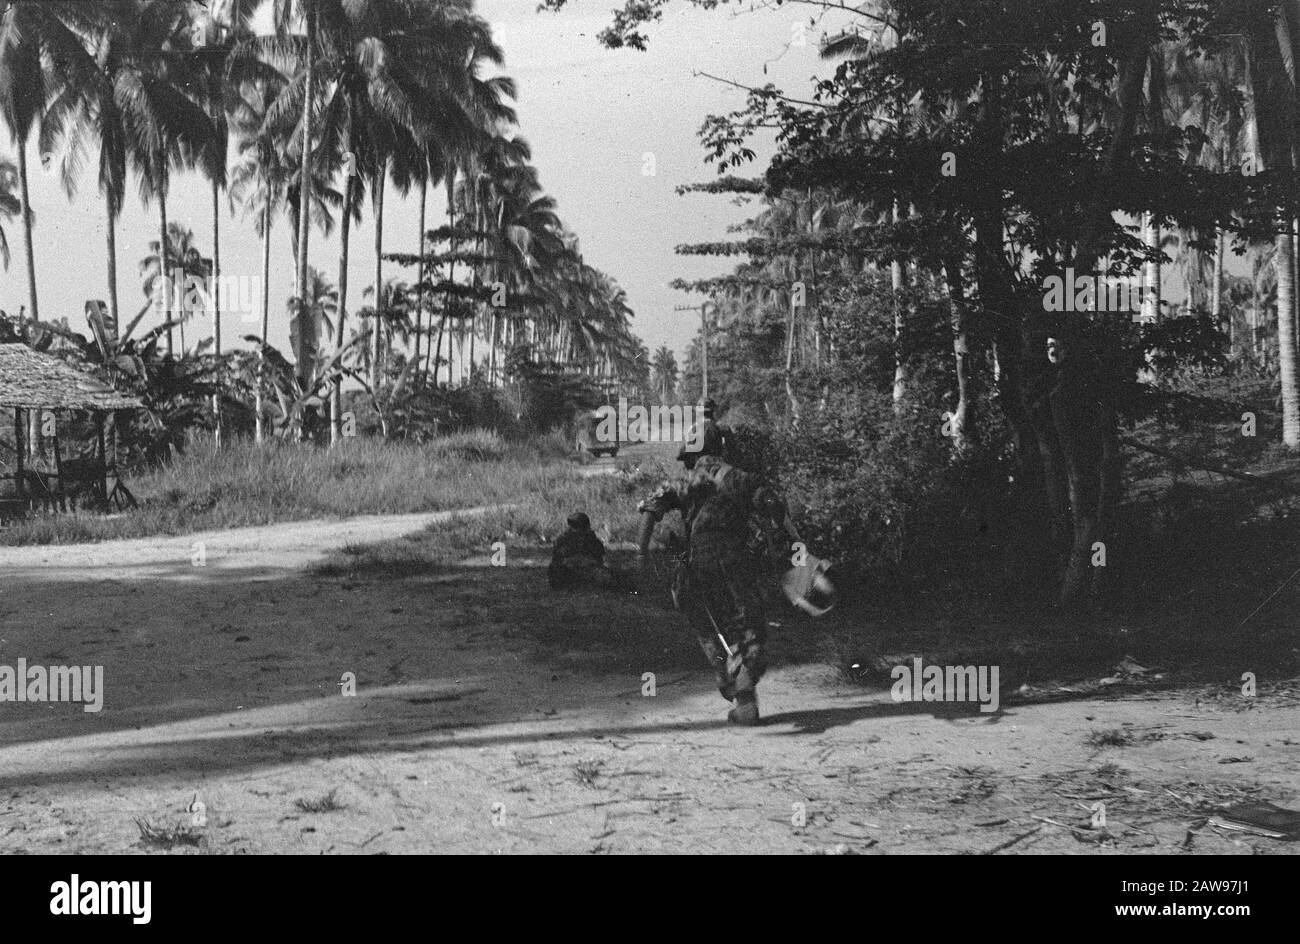 Loeboek Pakem and Baoengan  [Dutch soldiers in action] Date: July 29, 1948 Location: Indonesia, Dutch East Indies, Sumatra Stock Photo